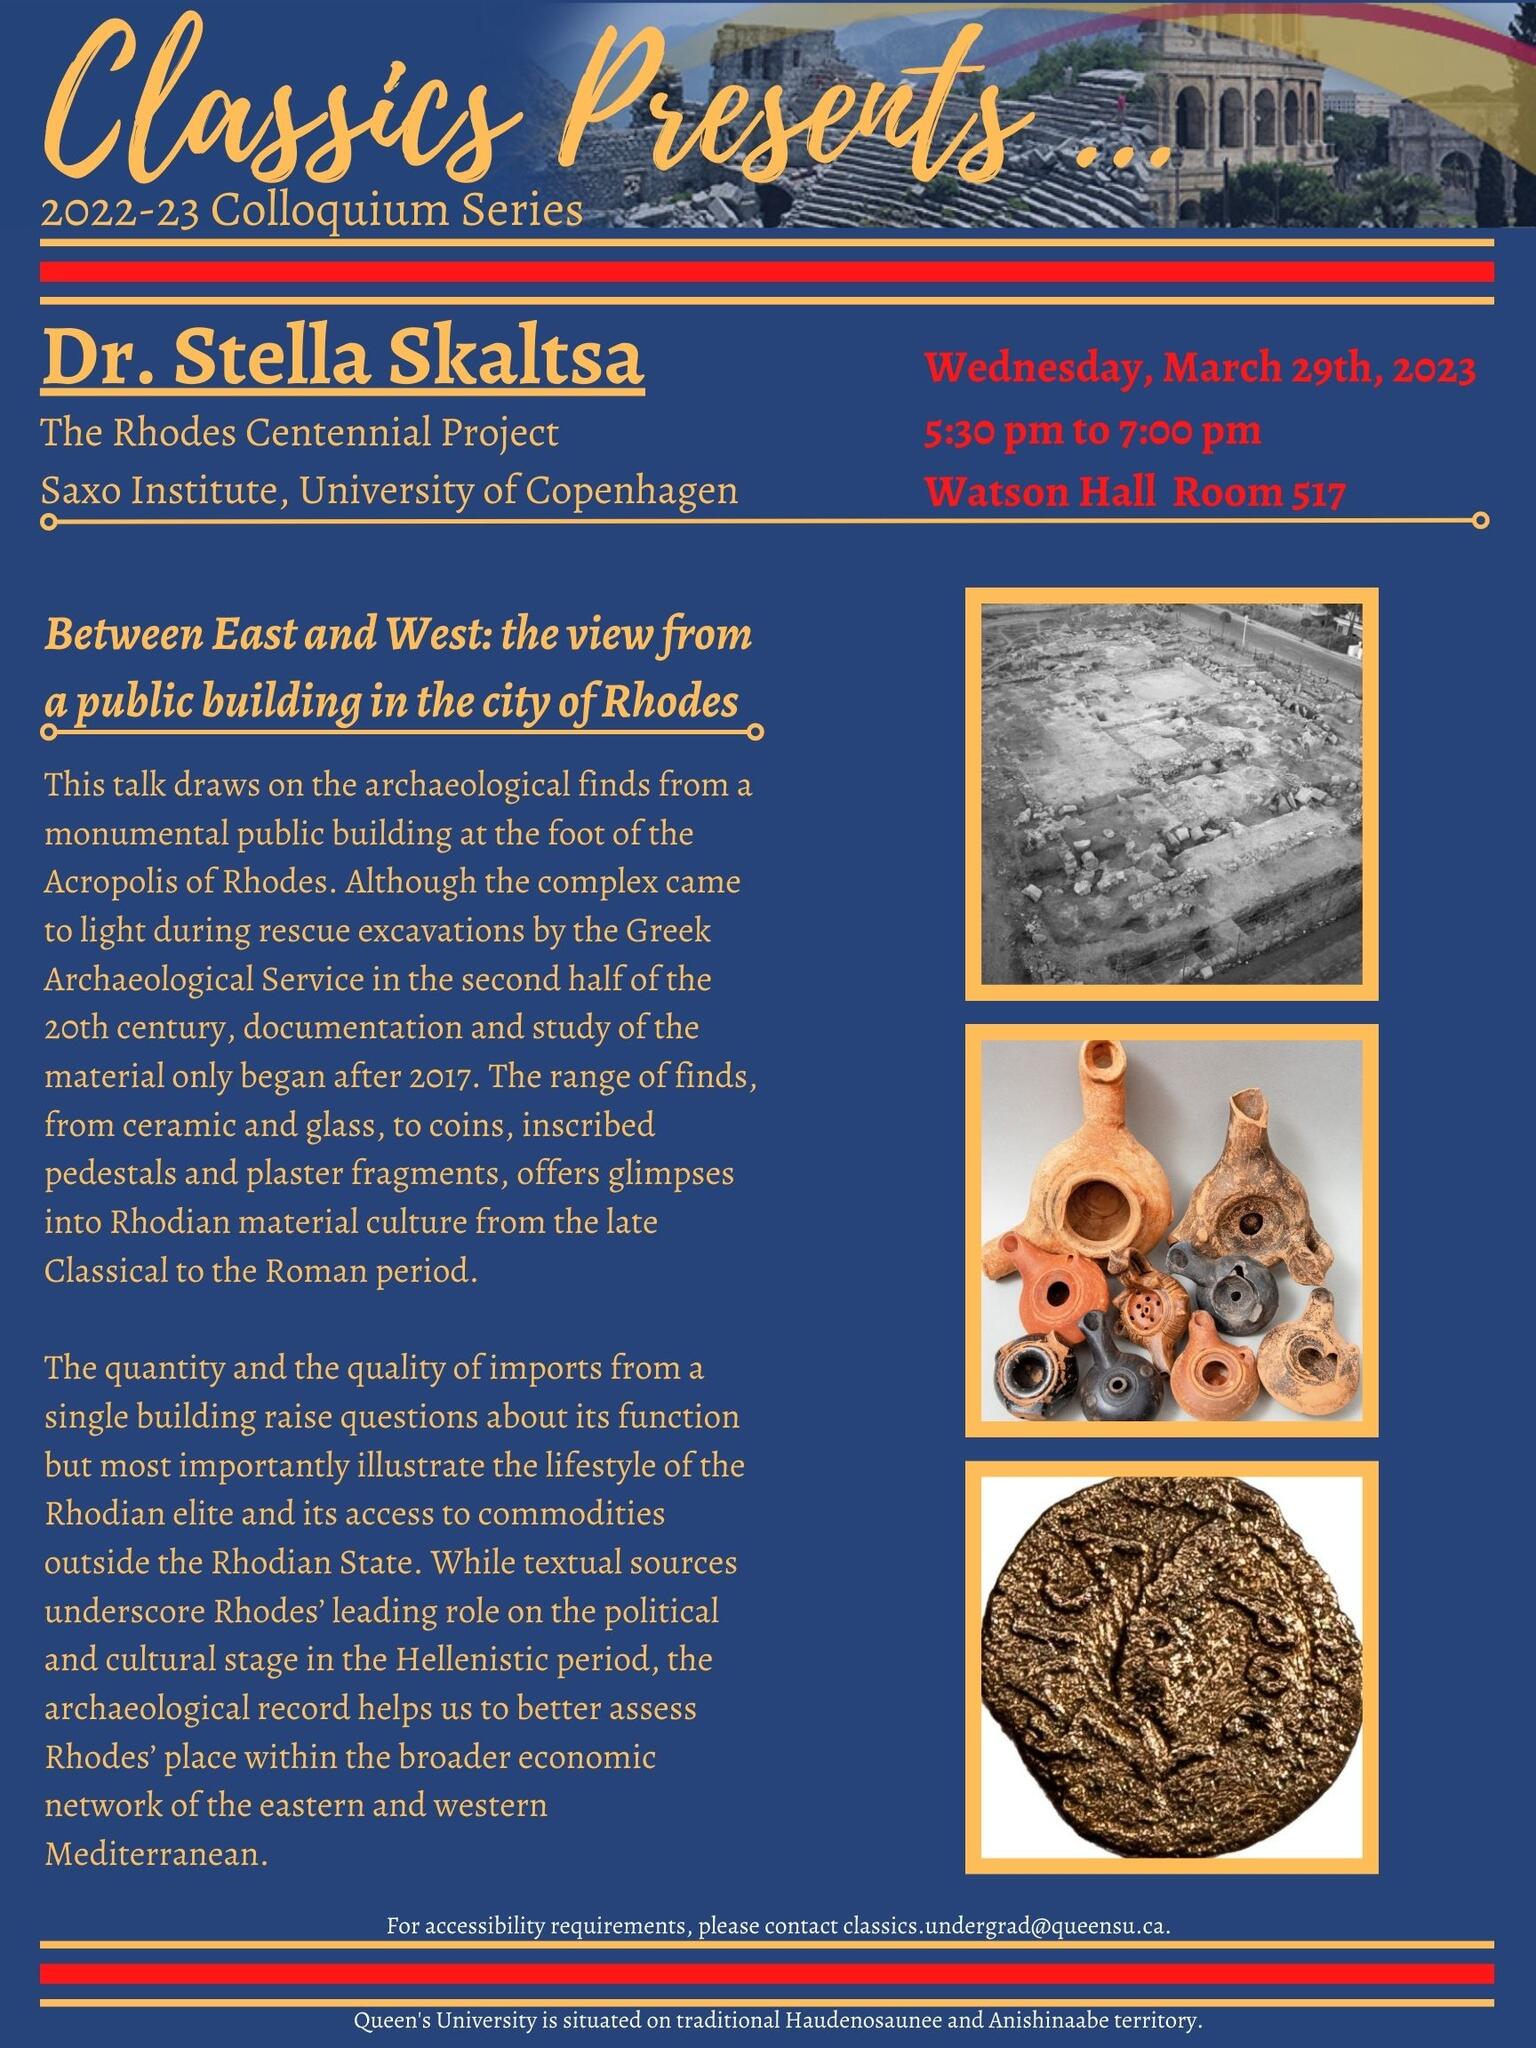 Classics Presents Dr. Stella Skaltsa